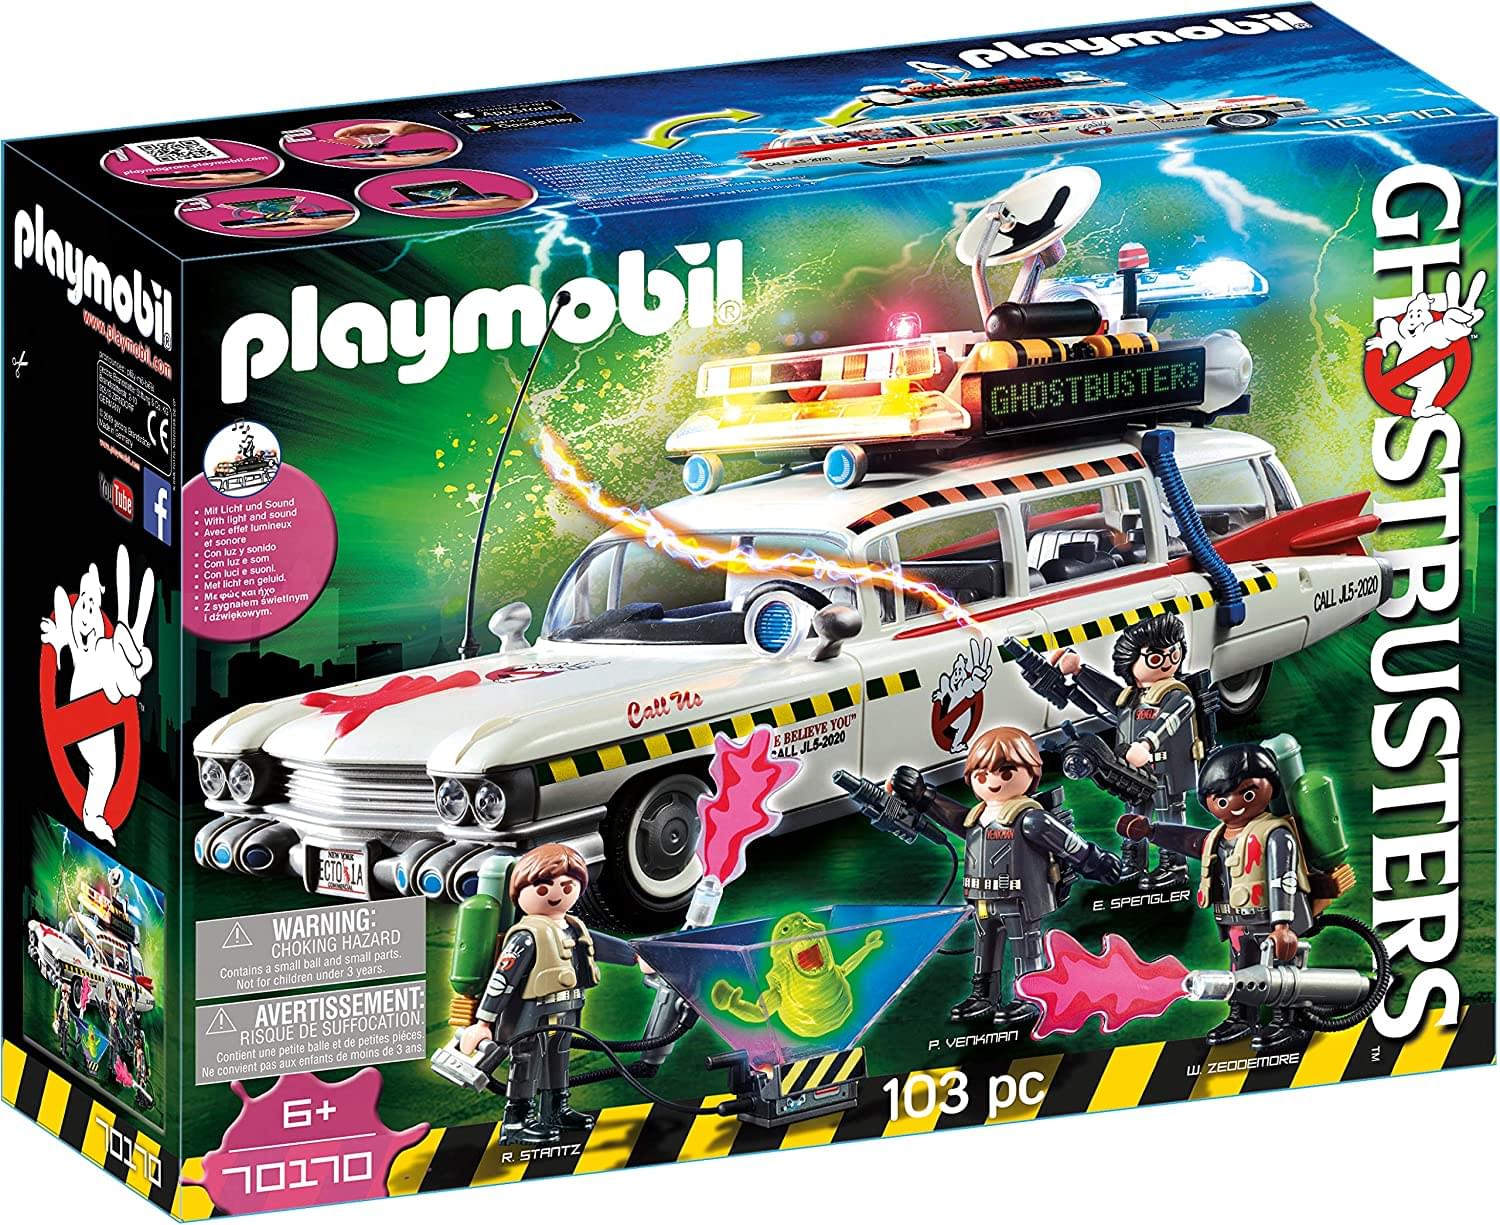 Ghostbusters Playmobil 70170 Ecto-1 103 Piece Building Set